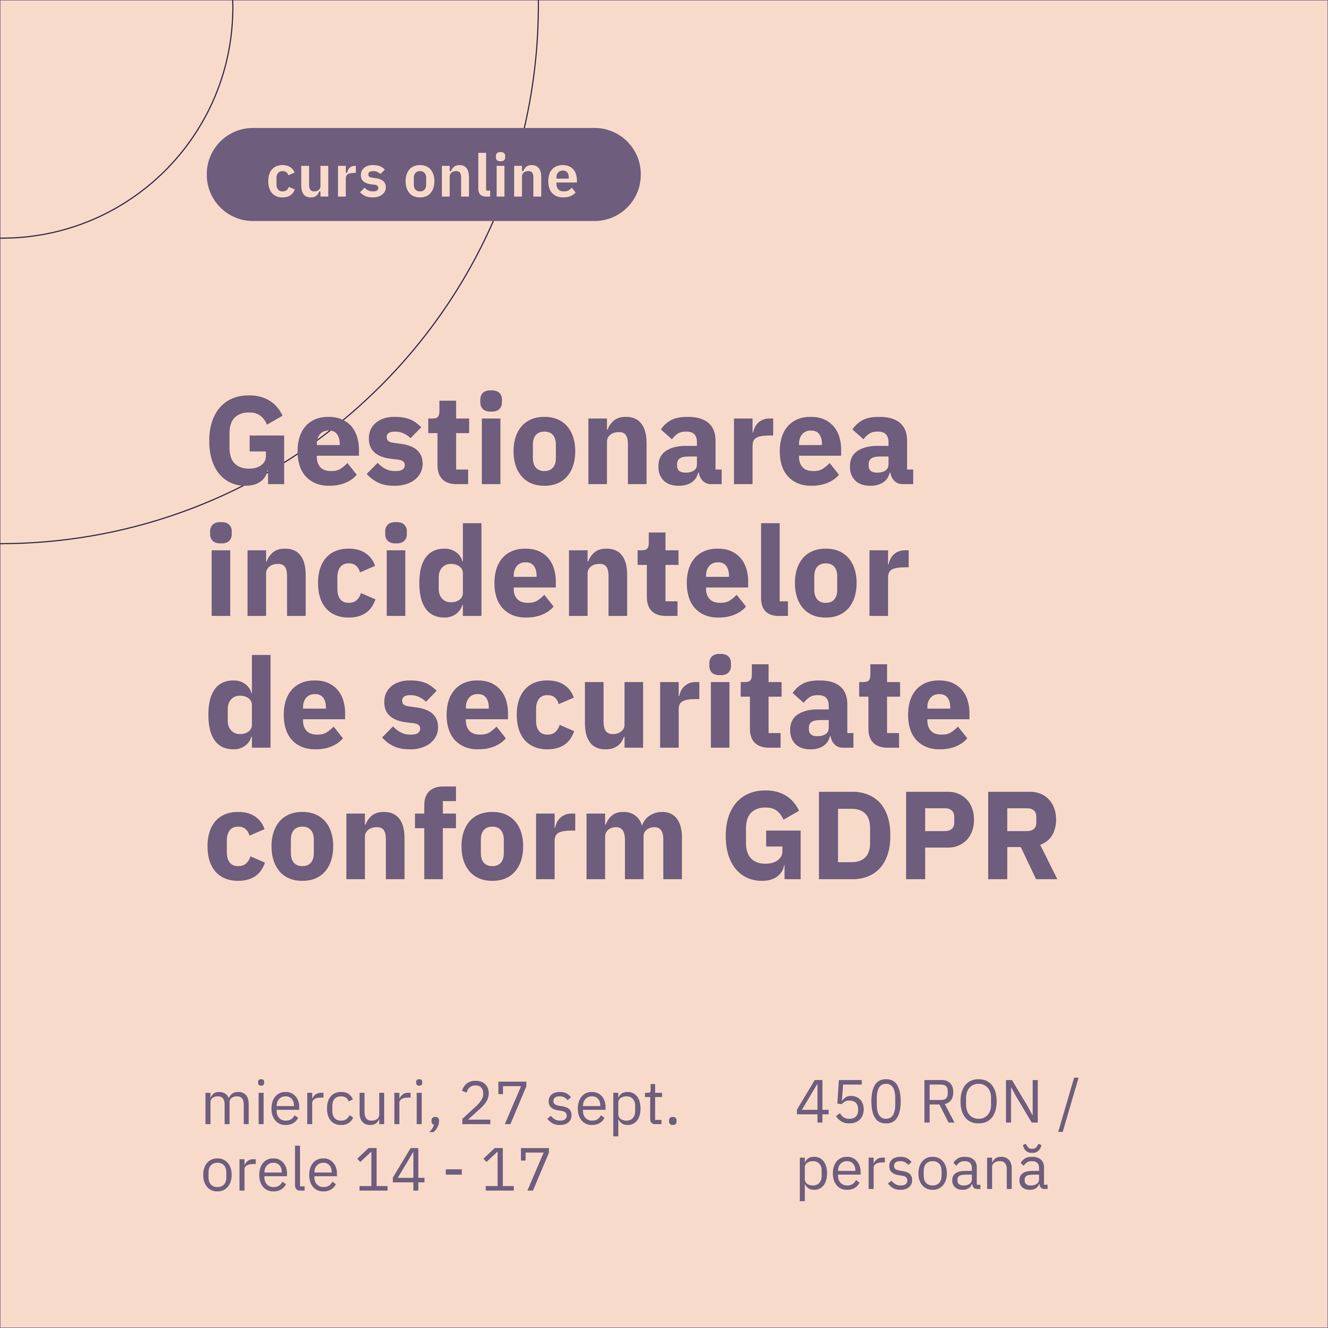 Gestionarea incidentelor de securitate conform GDPR - curs online - privacylearning.ro